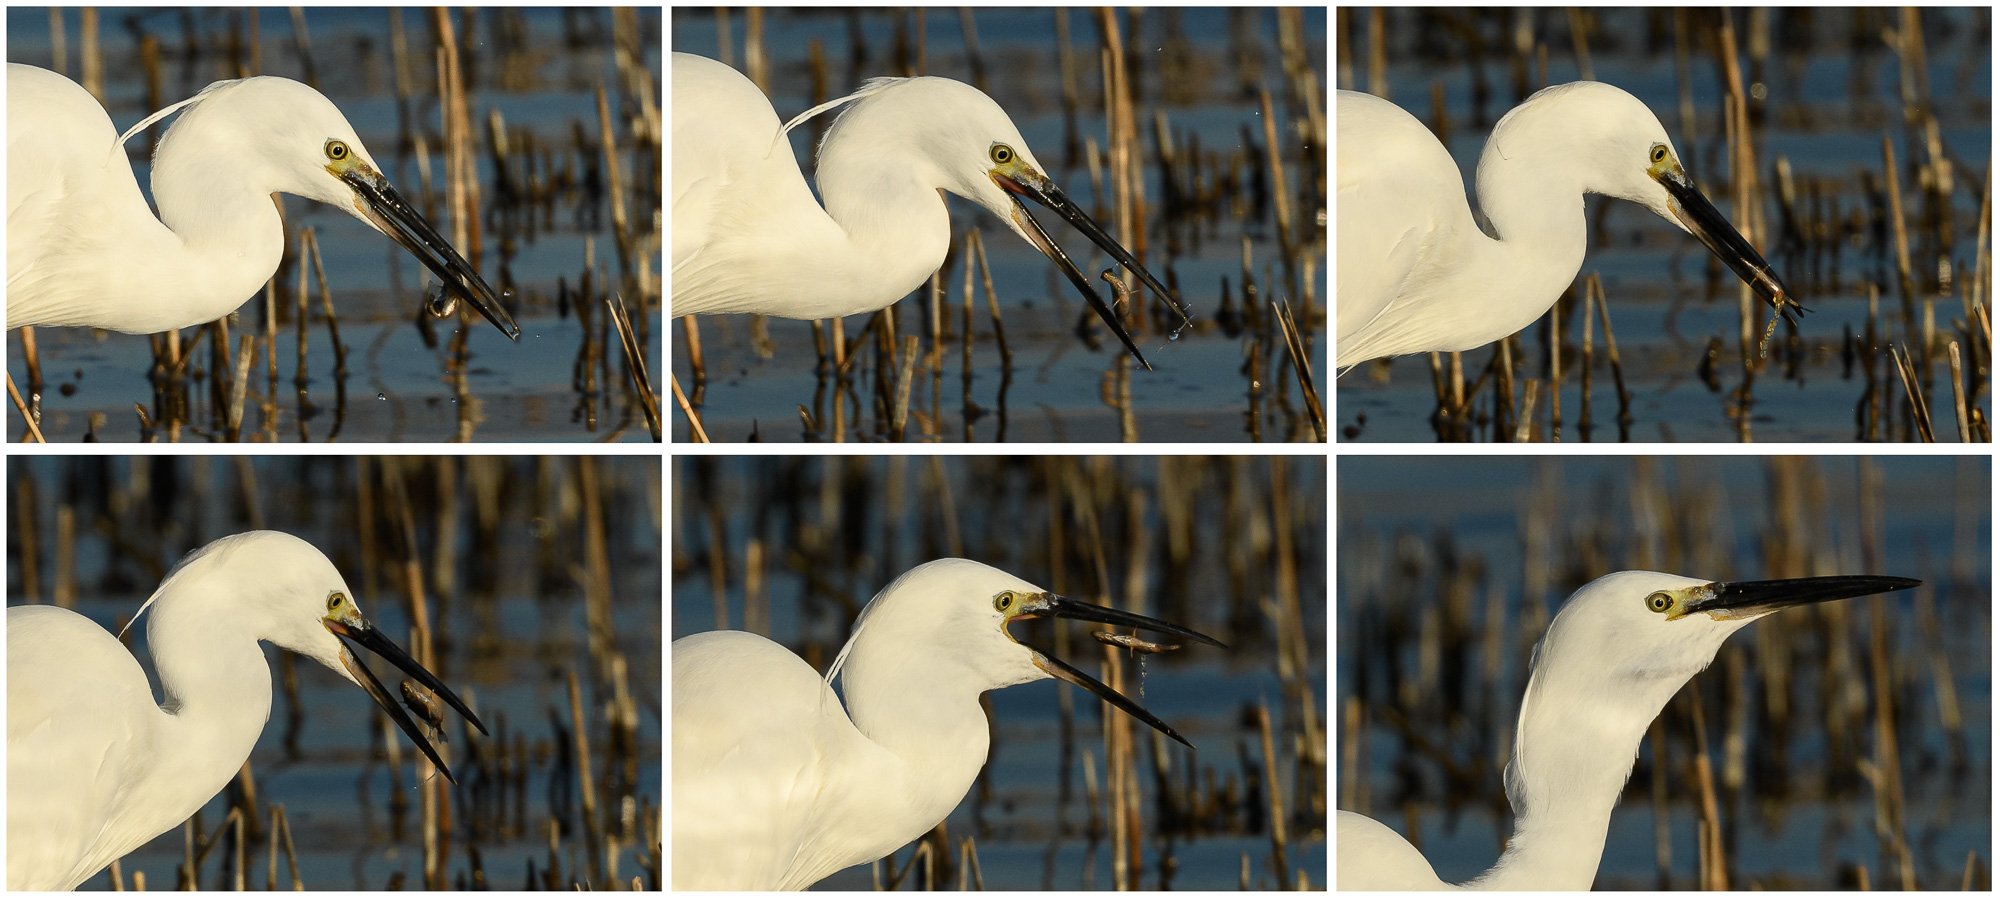 From catch to swallow: little egret (Egretta garzetta) and its prey